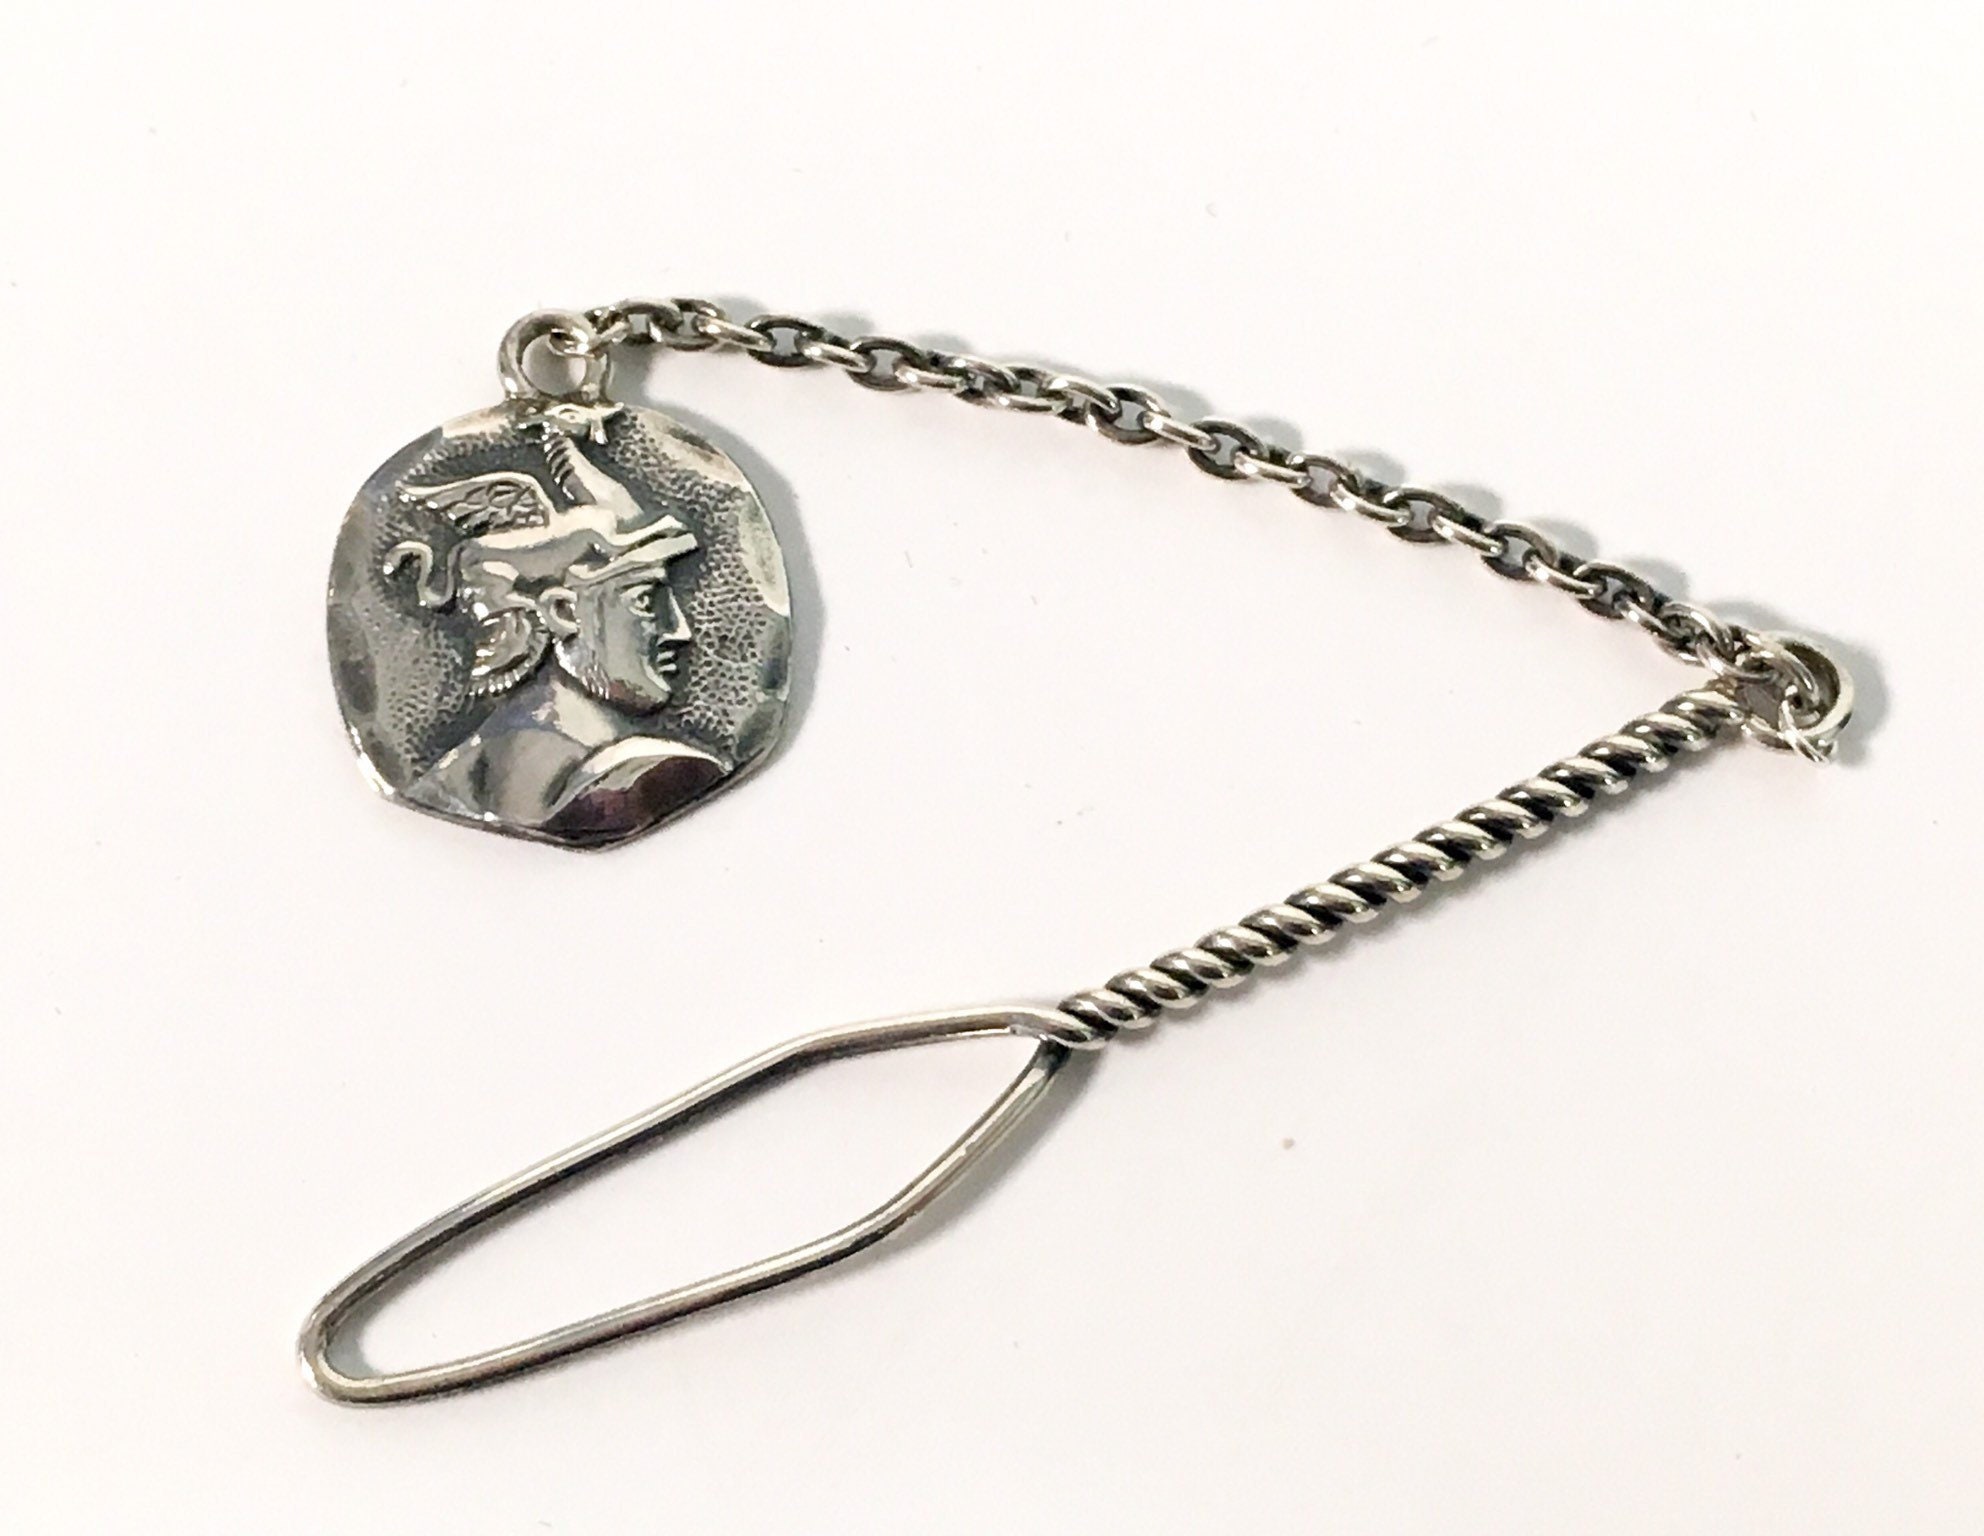 Vintage or Antique Men's Accessory - Loop Button Hook, Chain w/ Hermes